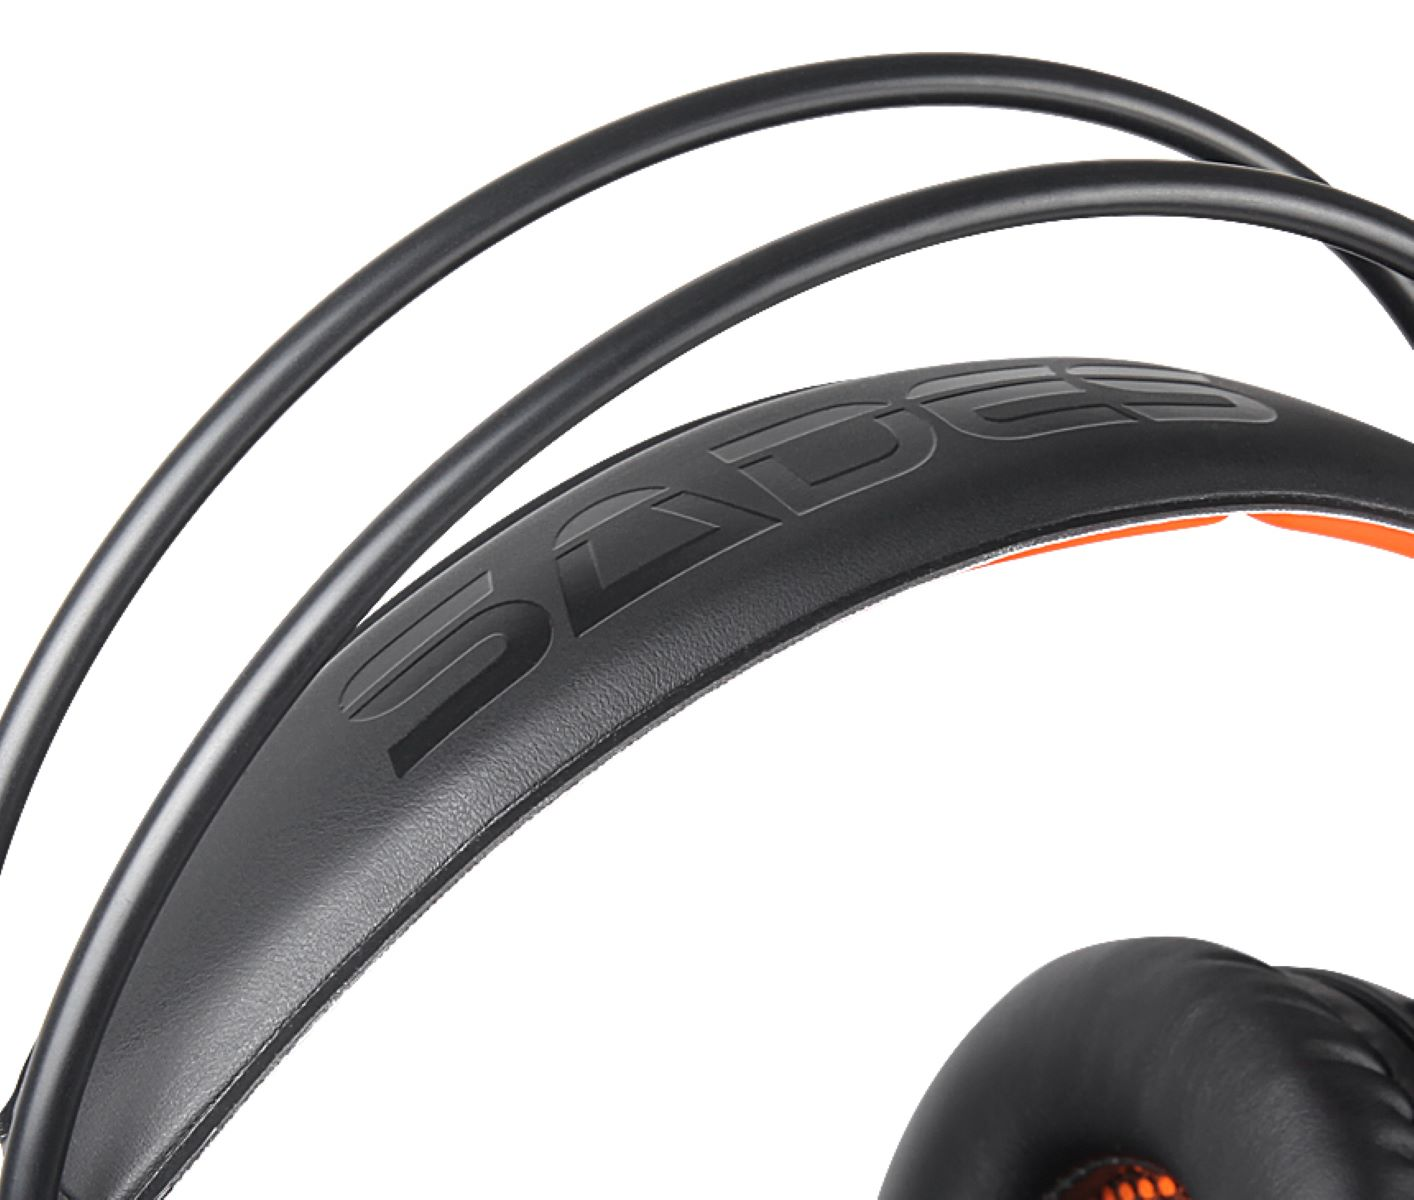 SADES A6, Over-ear Gaming Headset schwarz/orange